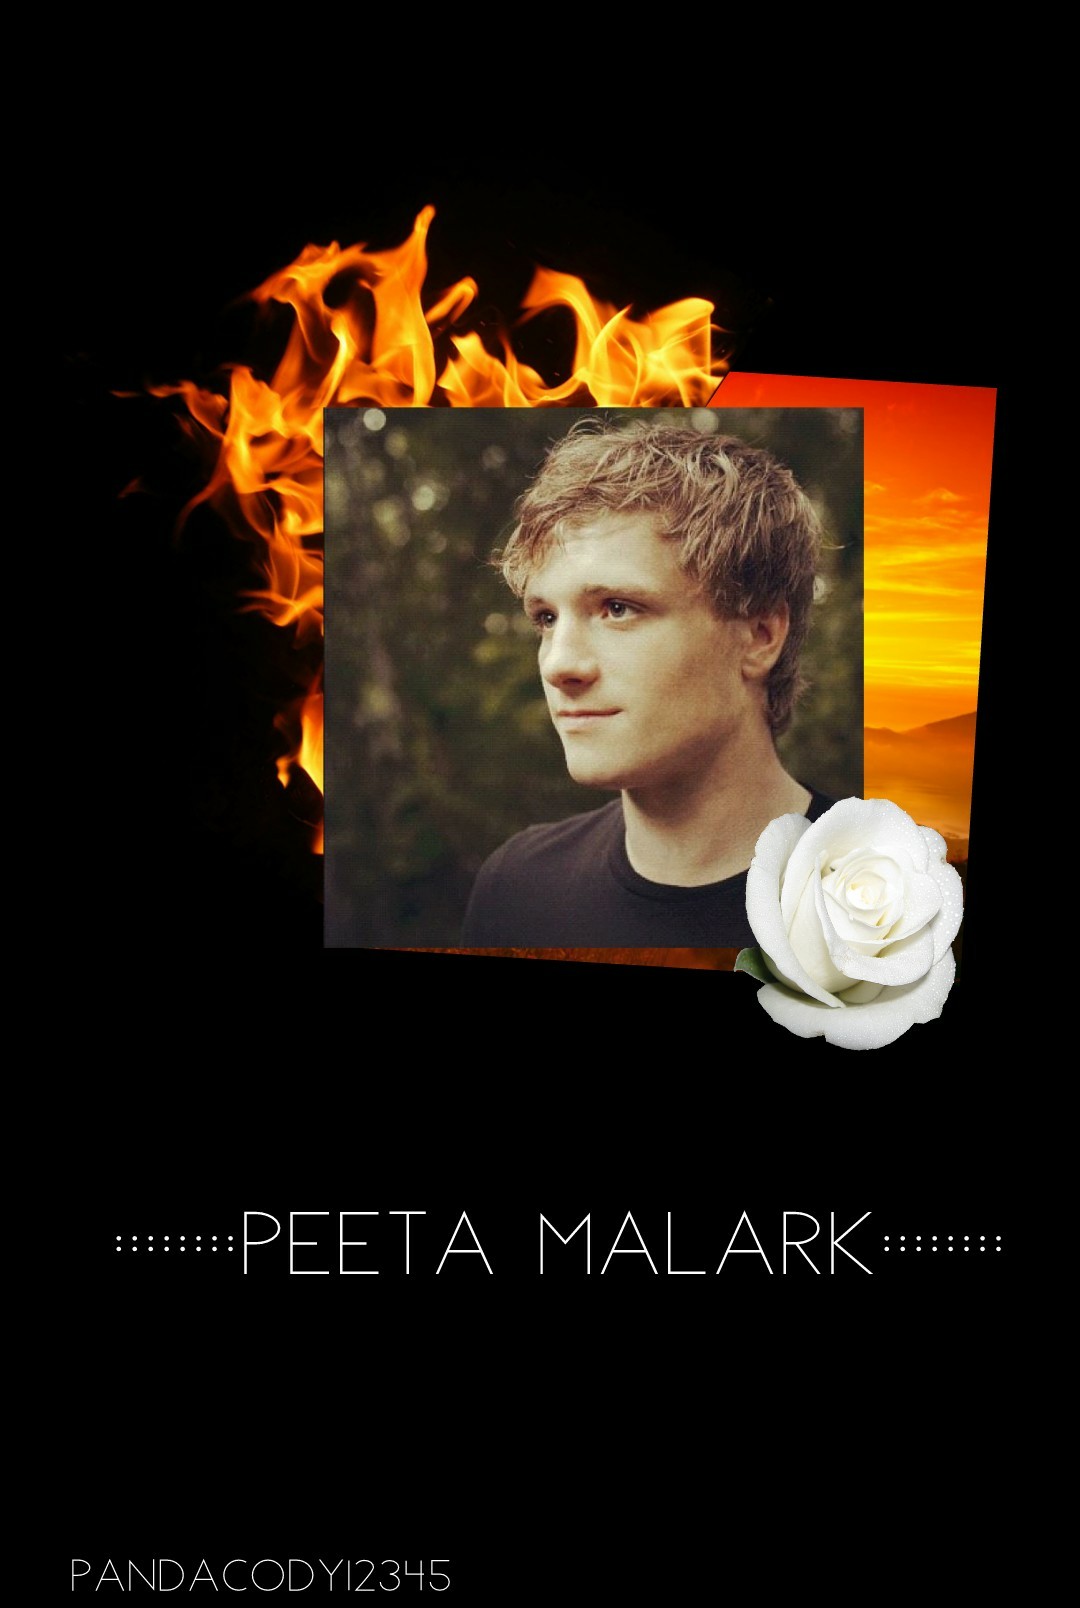 peeta malark edit inspired by sparkles23